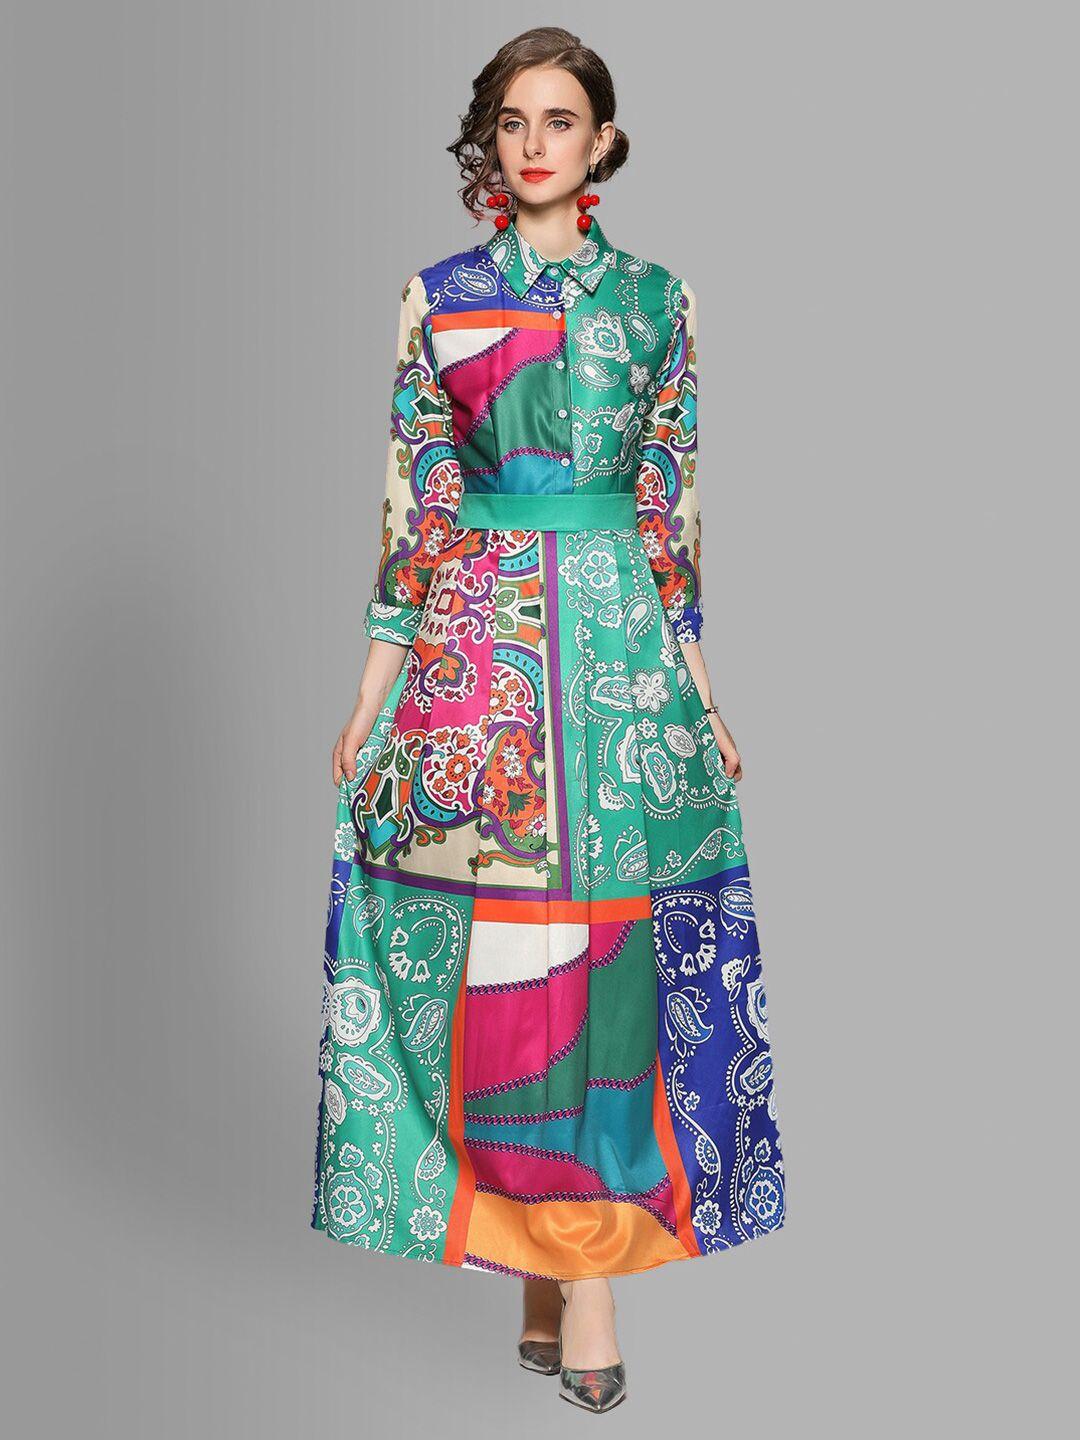 jc collection multicoloured ethnic motifs maxi dress